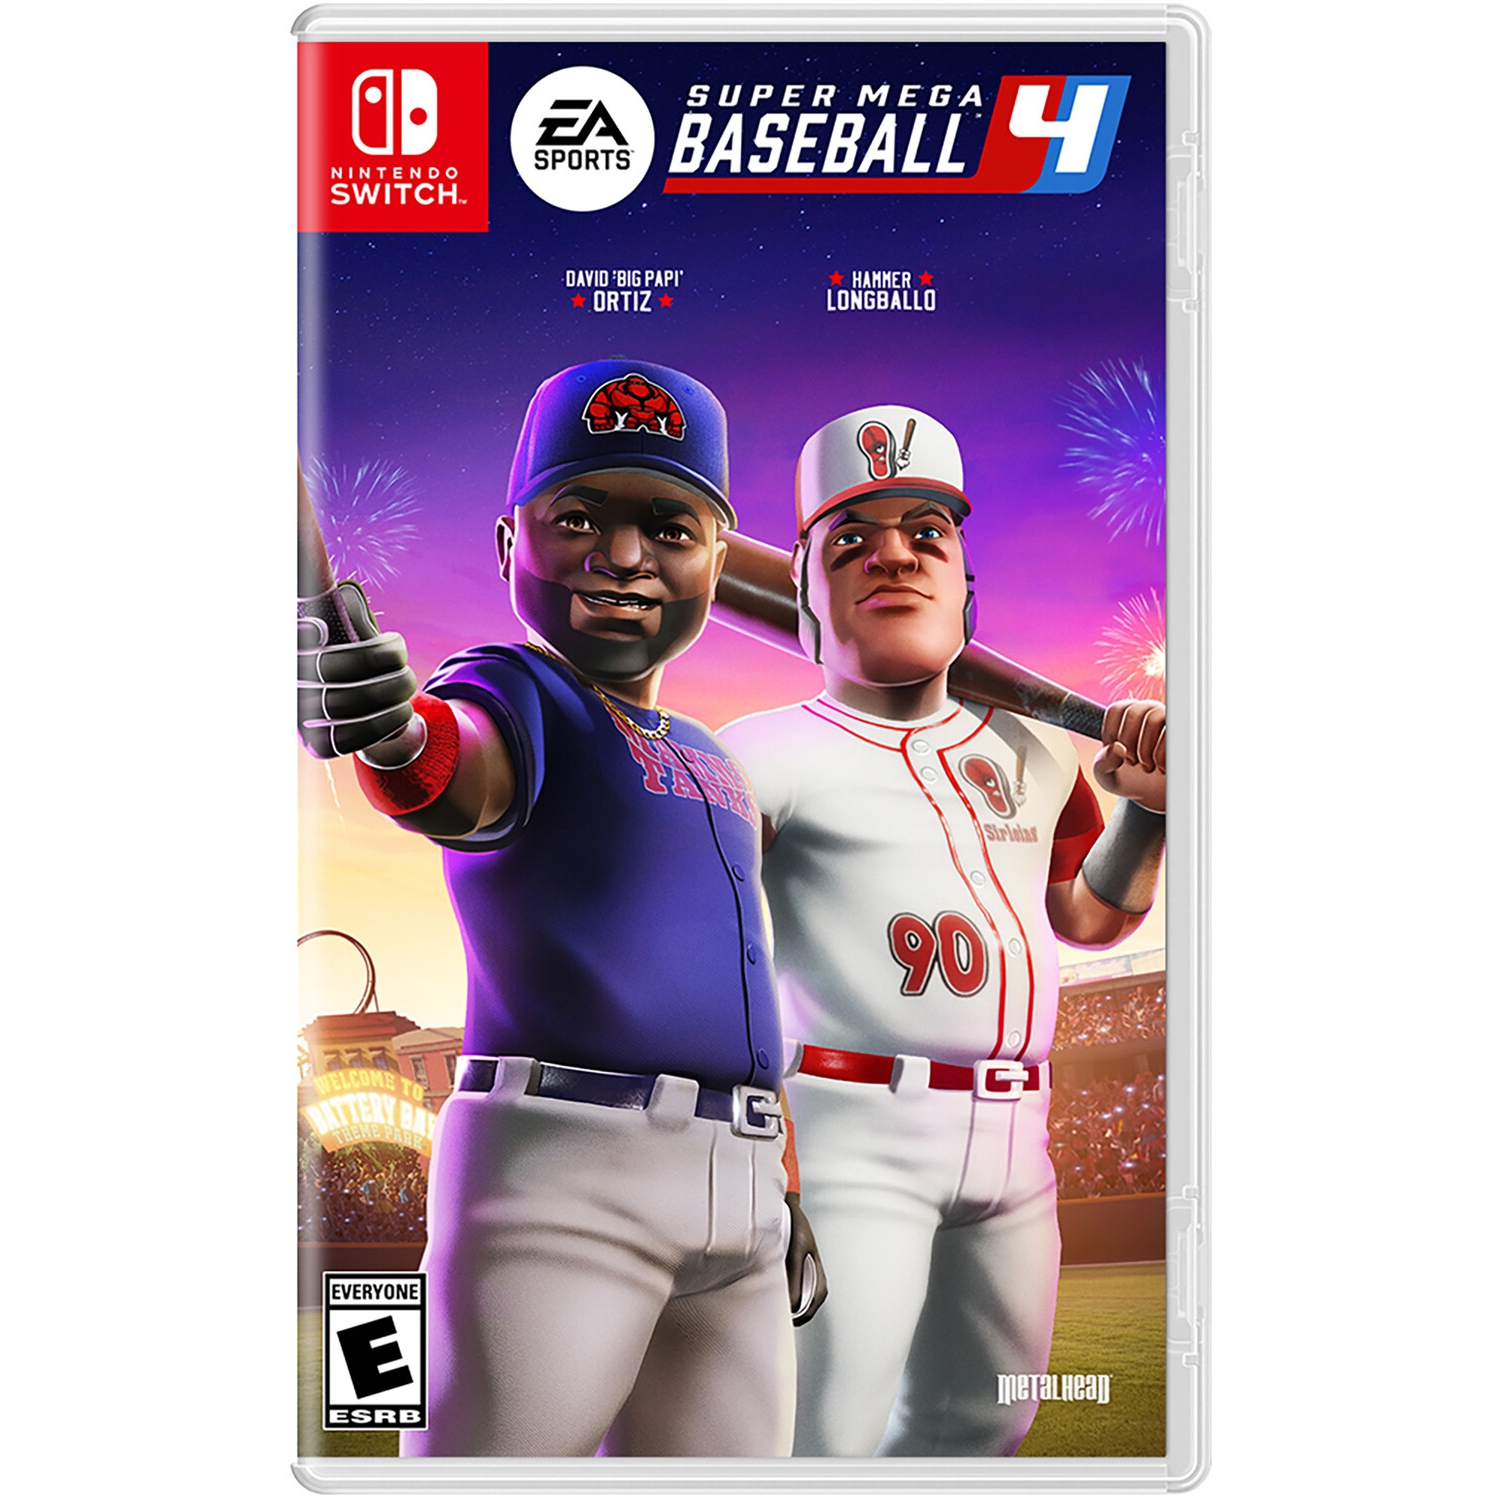 Super Mega Baseball 4 for Nintendo Switch [VIDEOGAMES]